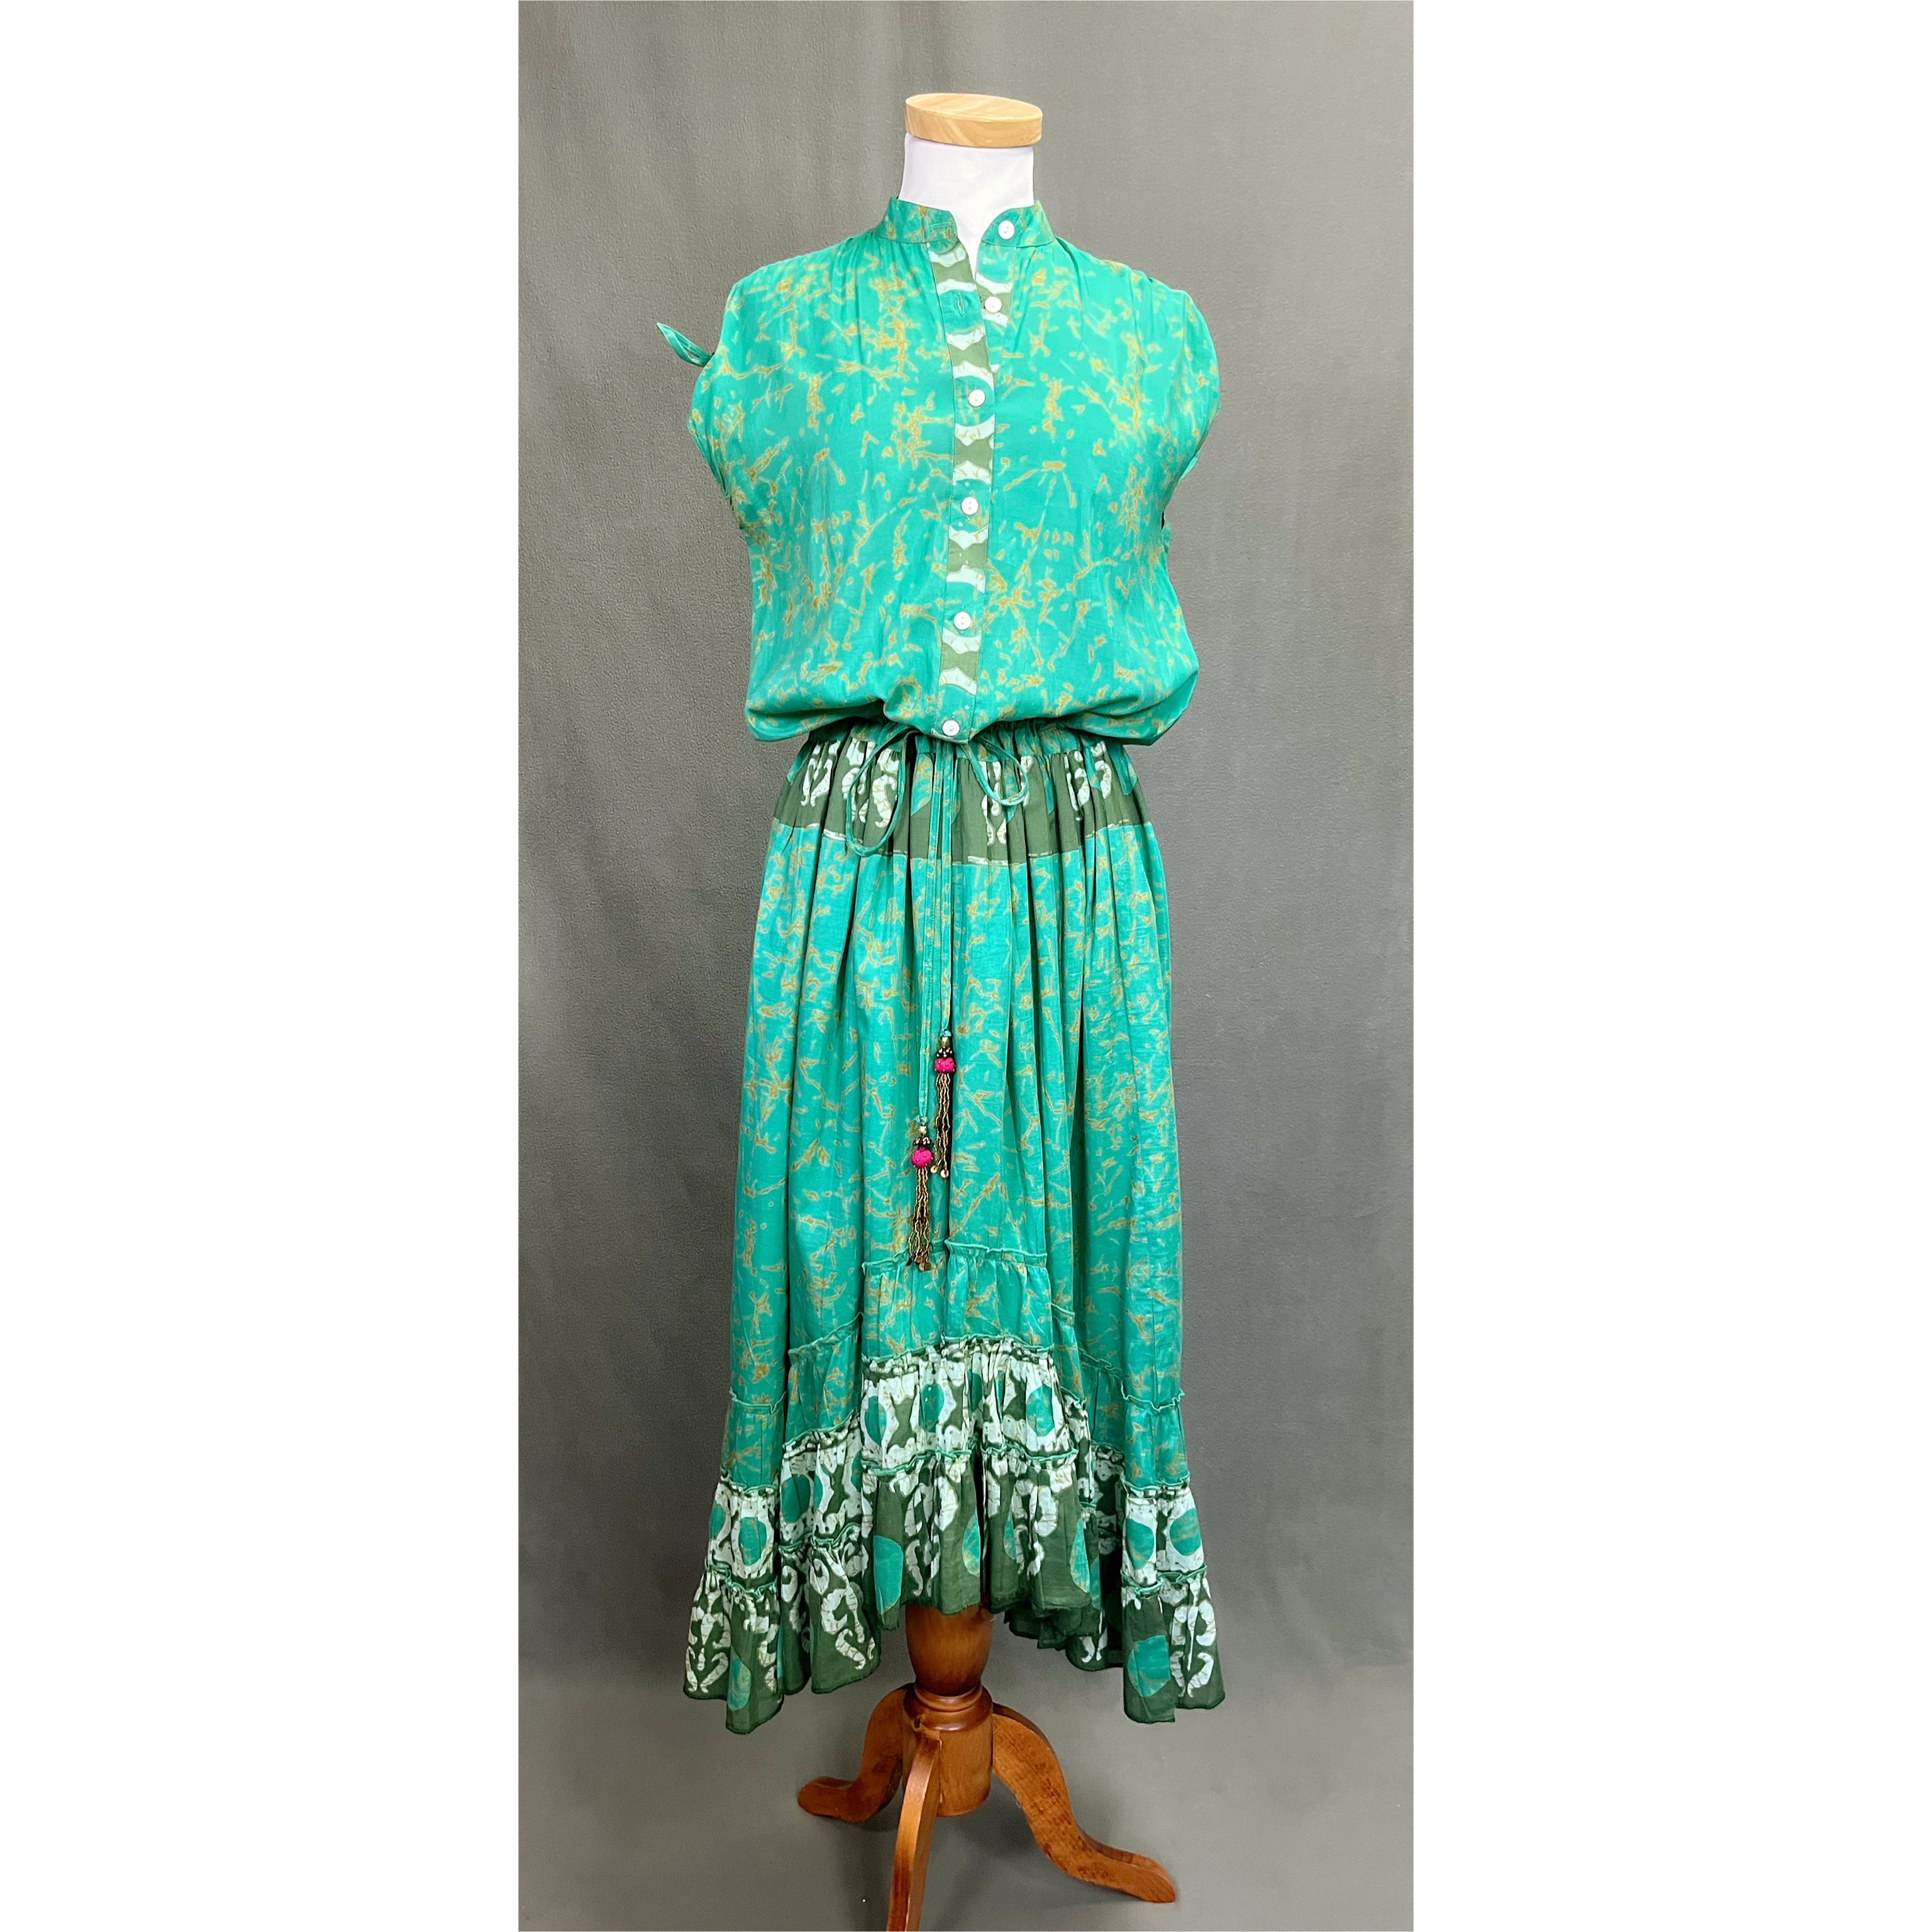 Bell green print dress, size S